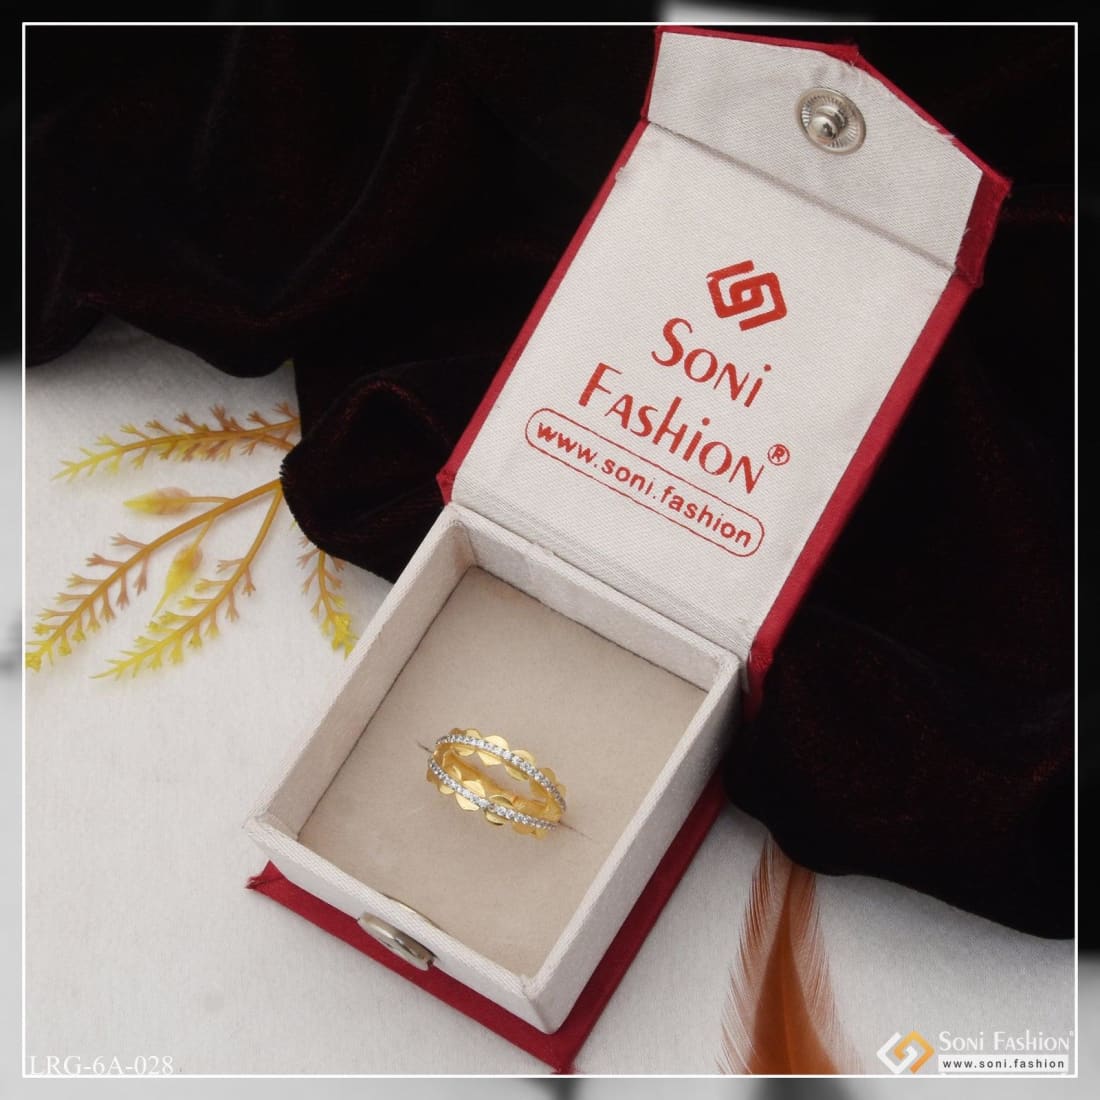 Leaf Petal Design Women's Fashion Micro Pave Diamond Promise Gold Ring 0.10  Ctw. | eBay